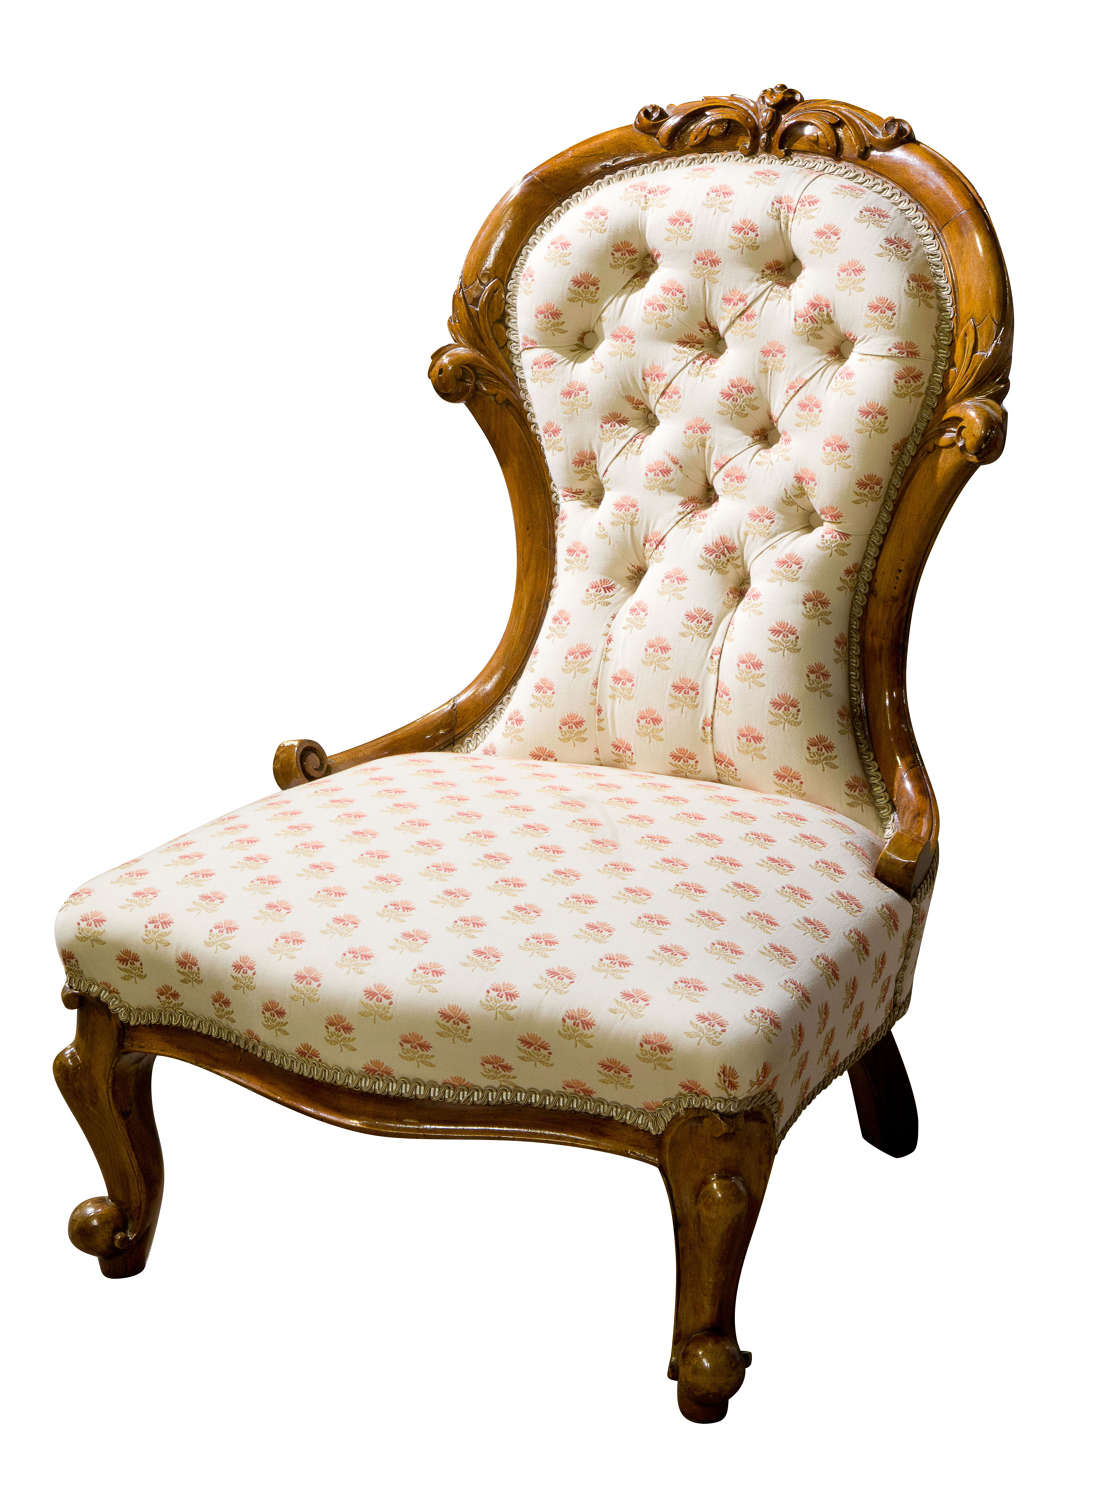 Victorian spoon backed walnut chair